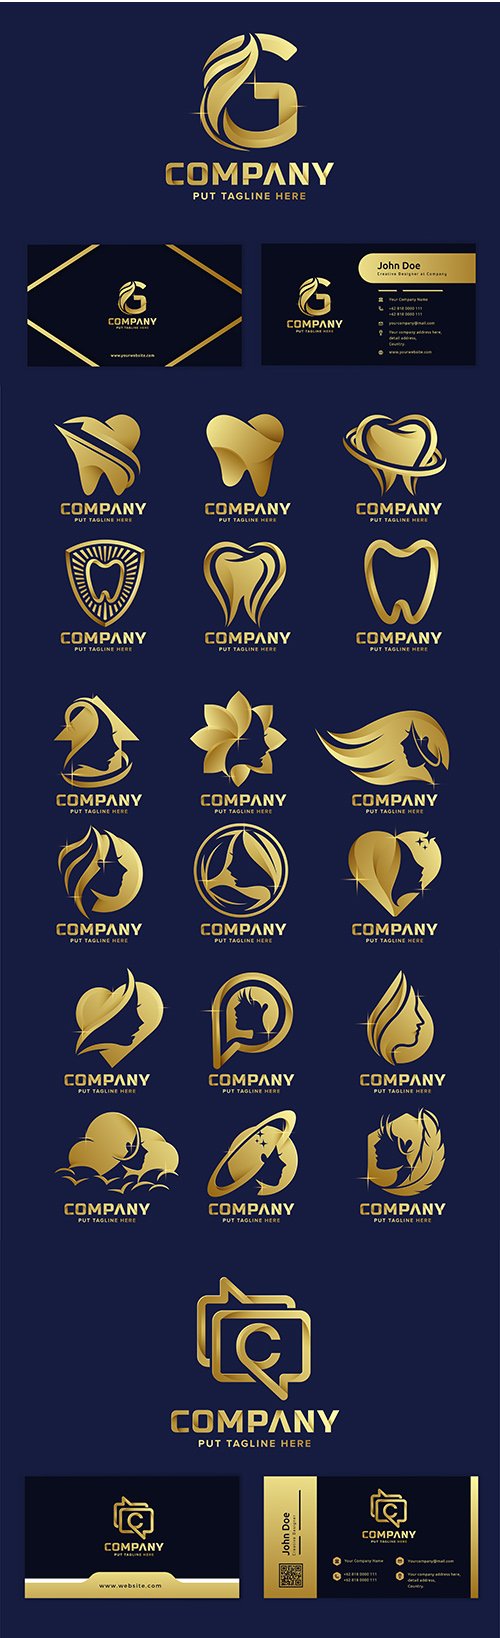 Premium luxury logos corporate company design 44